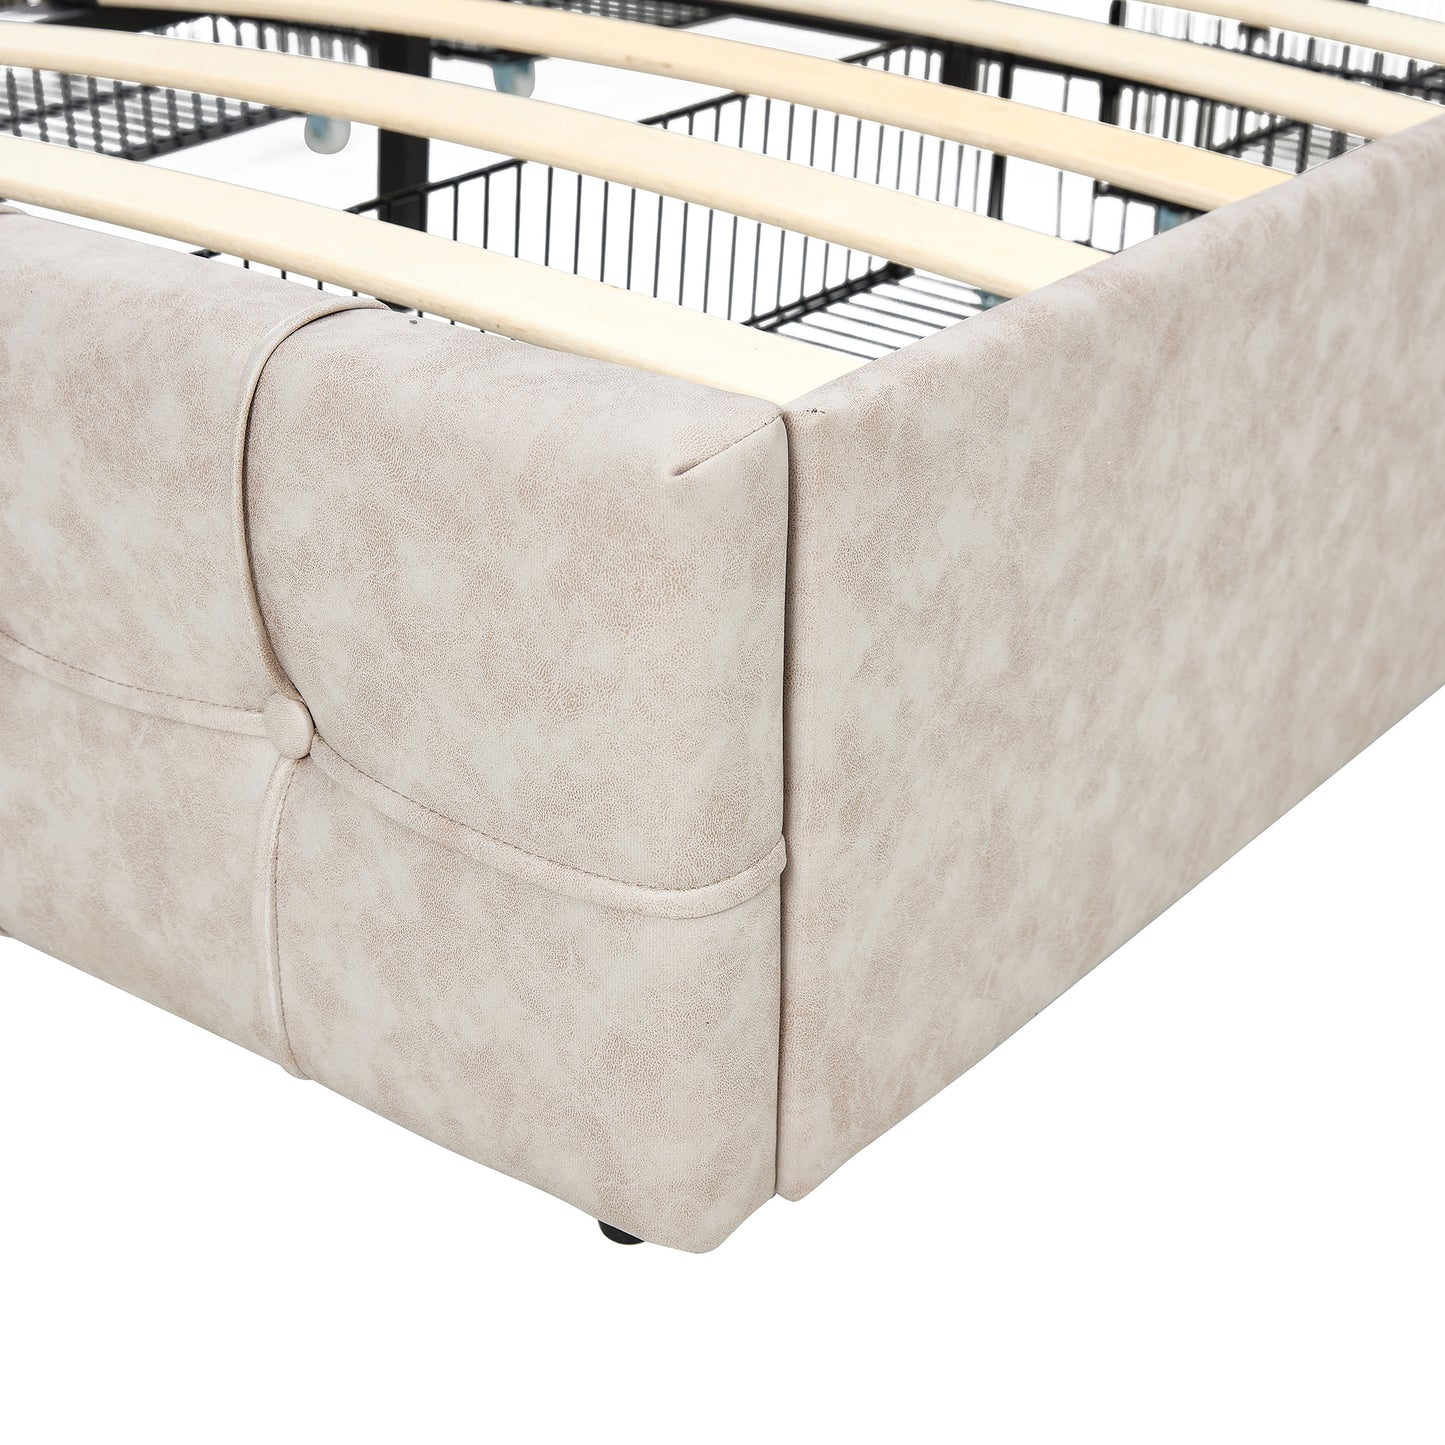 Beige Full Size Upholstered Platform Bed Frame with Adjustable Headboard and 4 Drawers Storage